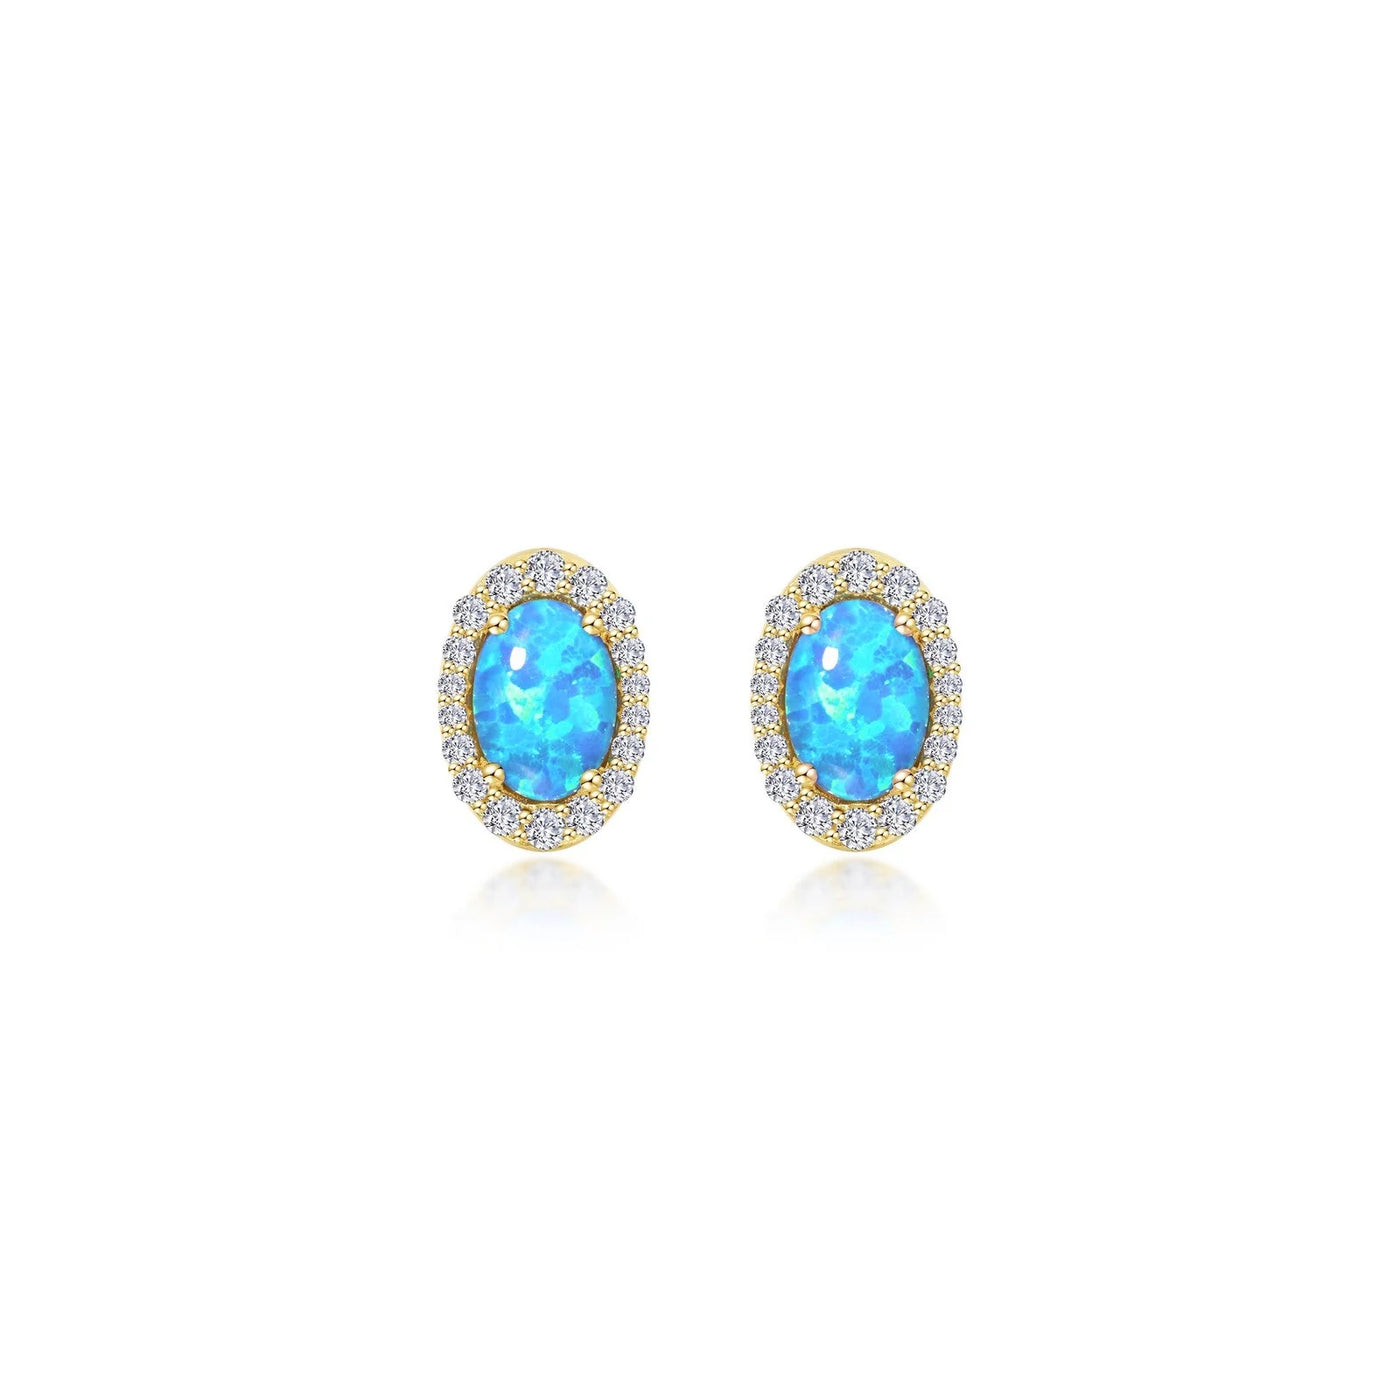 Vintage Inspired Blue Opal Halo Earrings